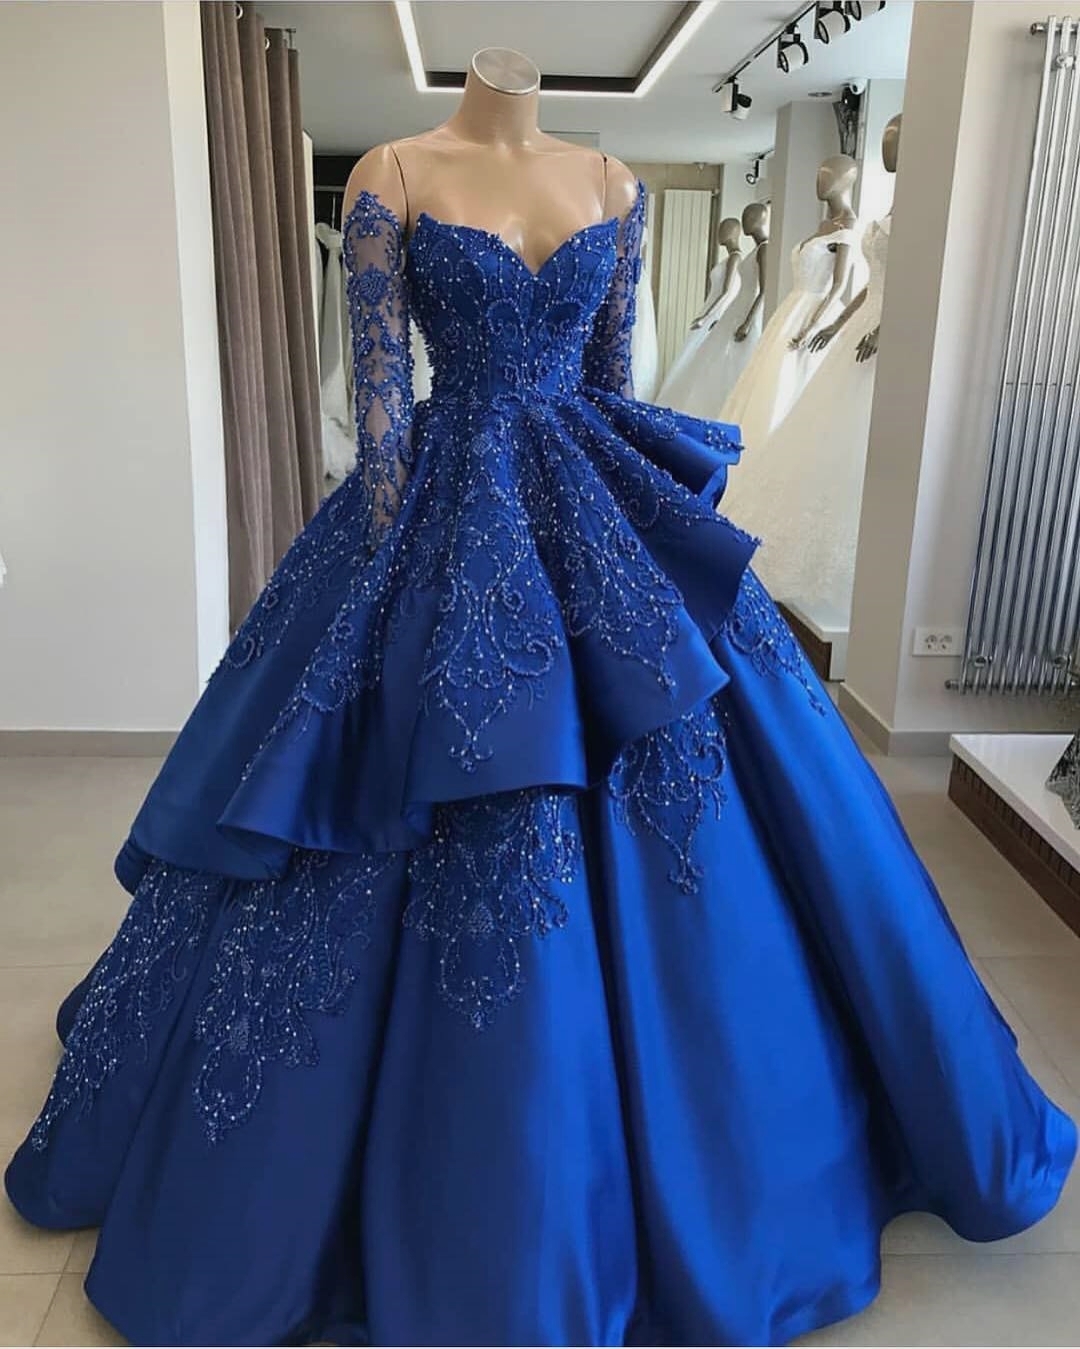 Royal Blue Satin Strapless Long Sleeve Beaded V Neck Prom Dress, Ball Gown